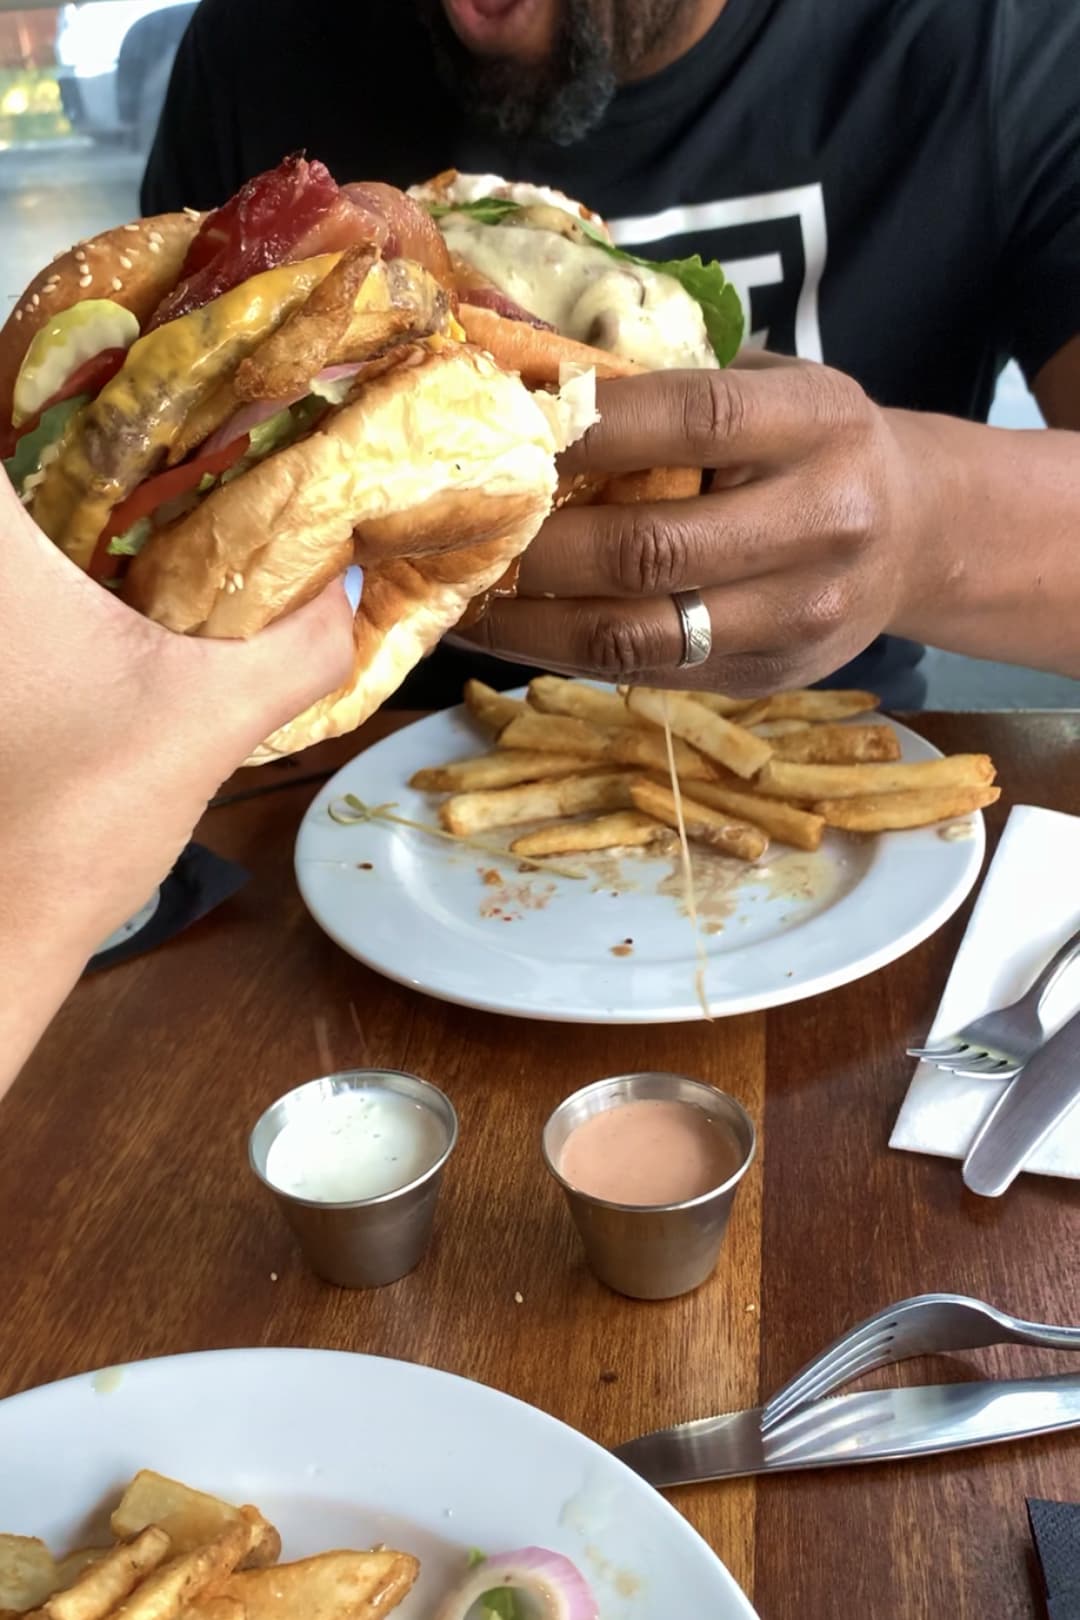 D.J. Lyttle eating a large hamburger